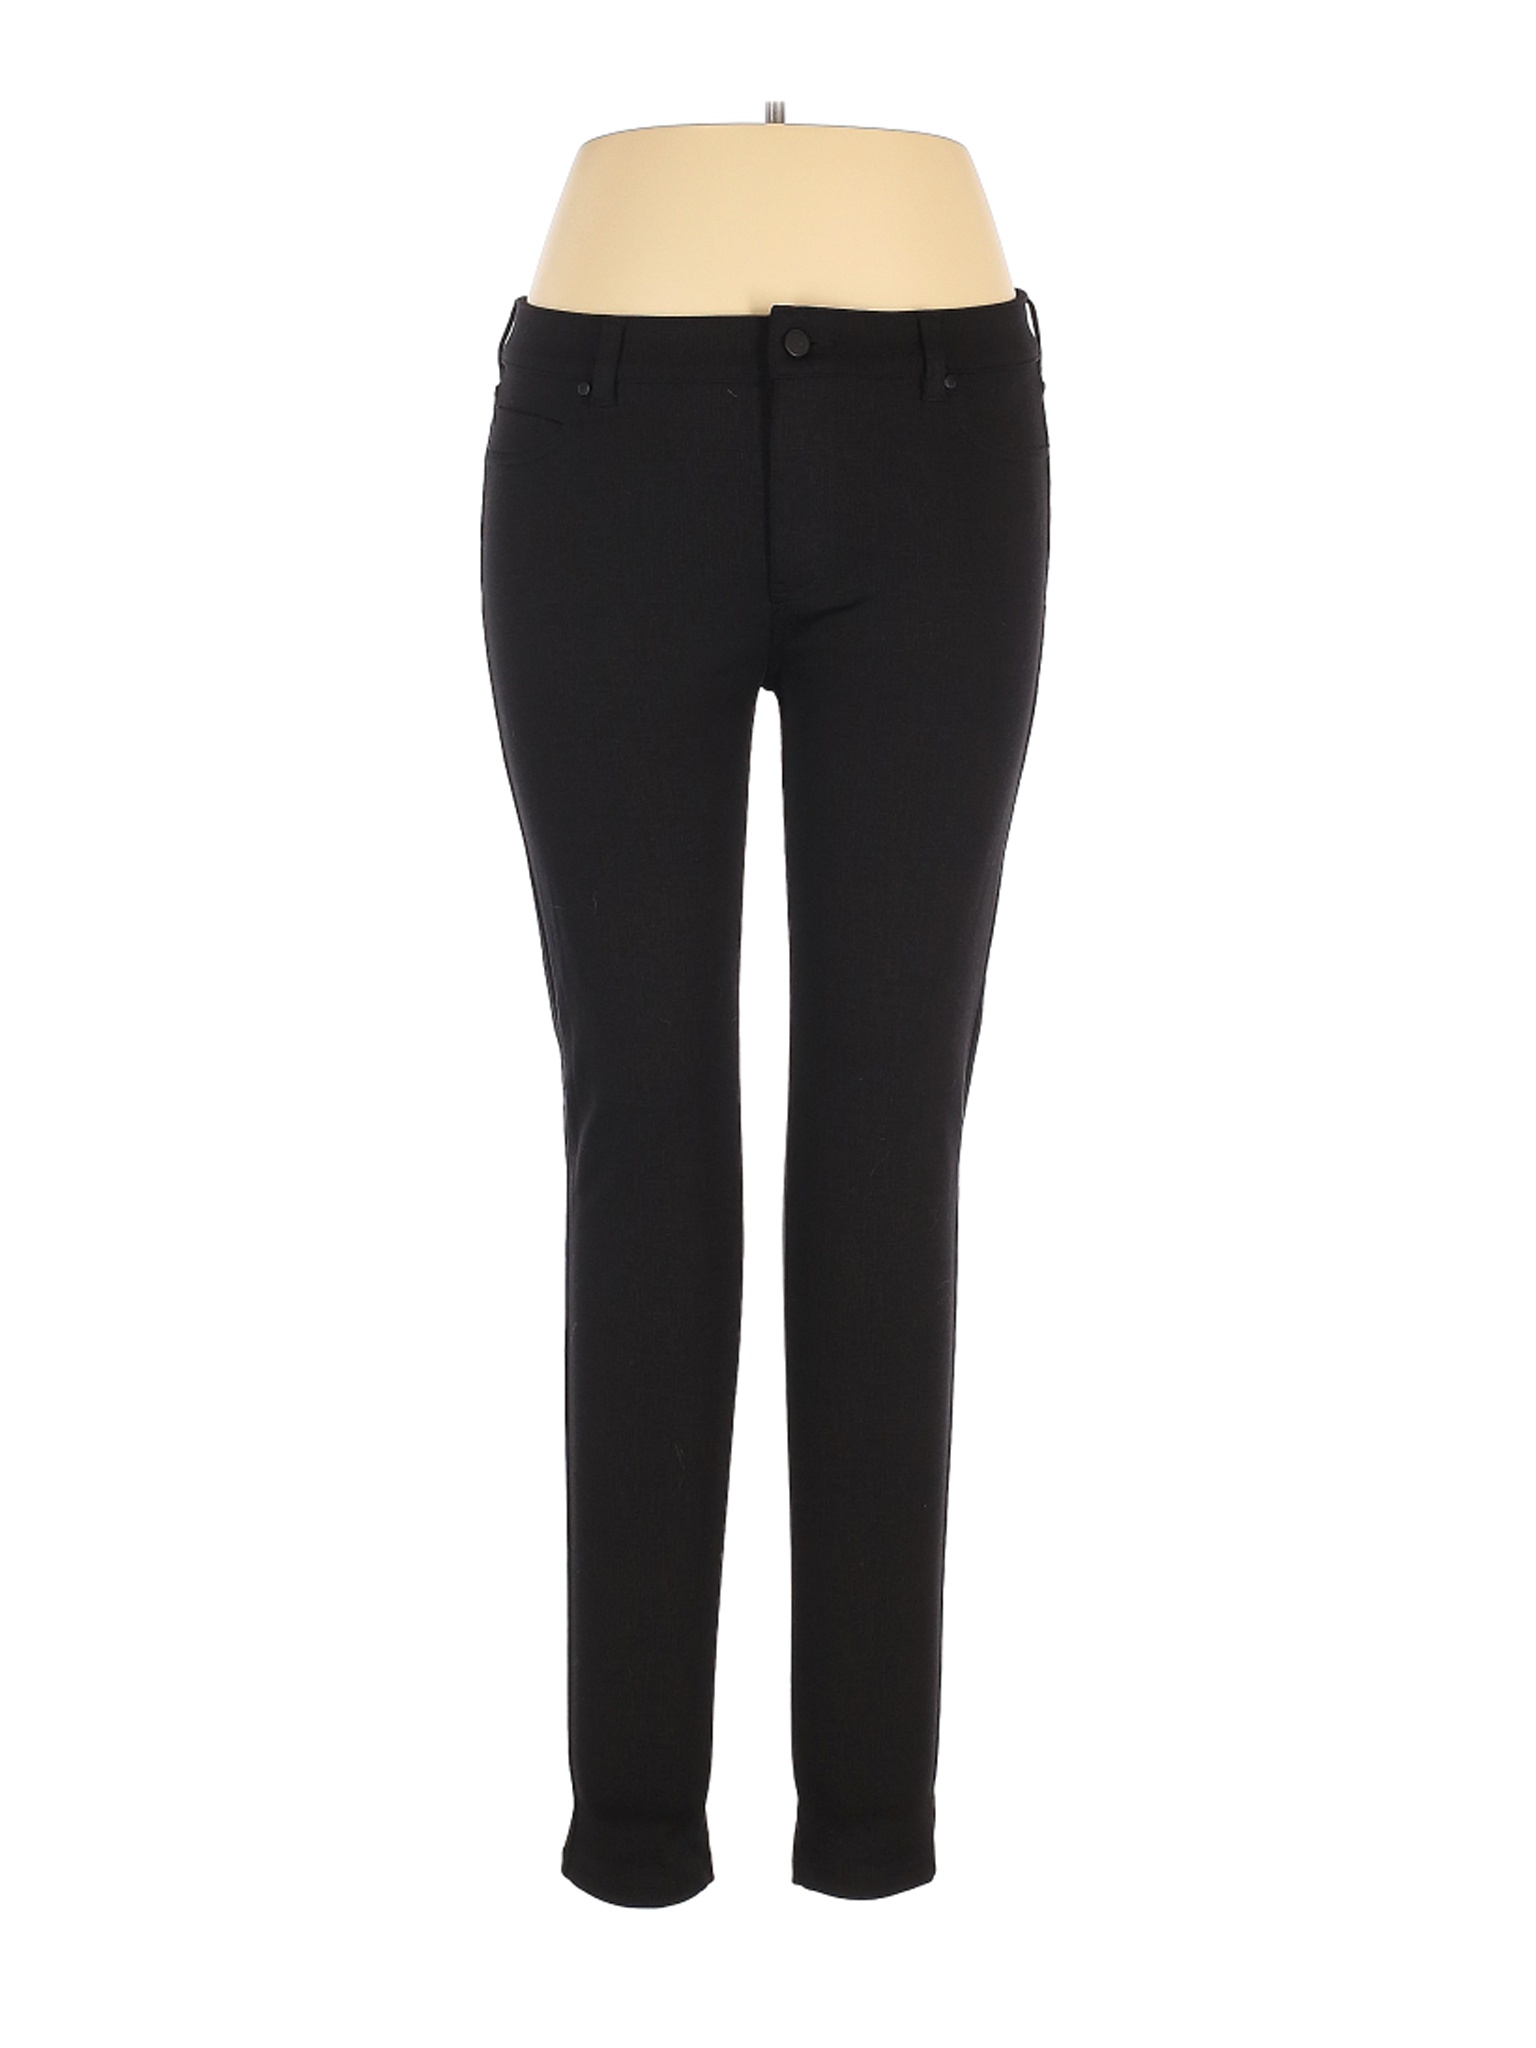 Liverpool Women Black Casual Pants 14 | eBay